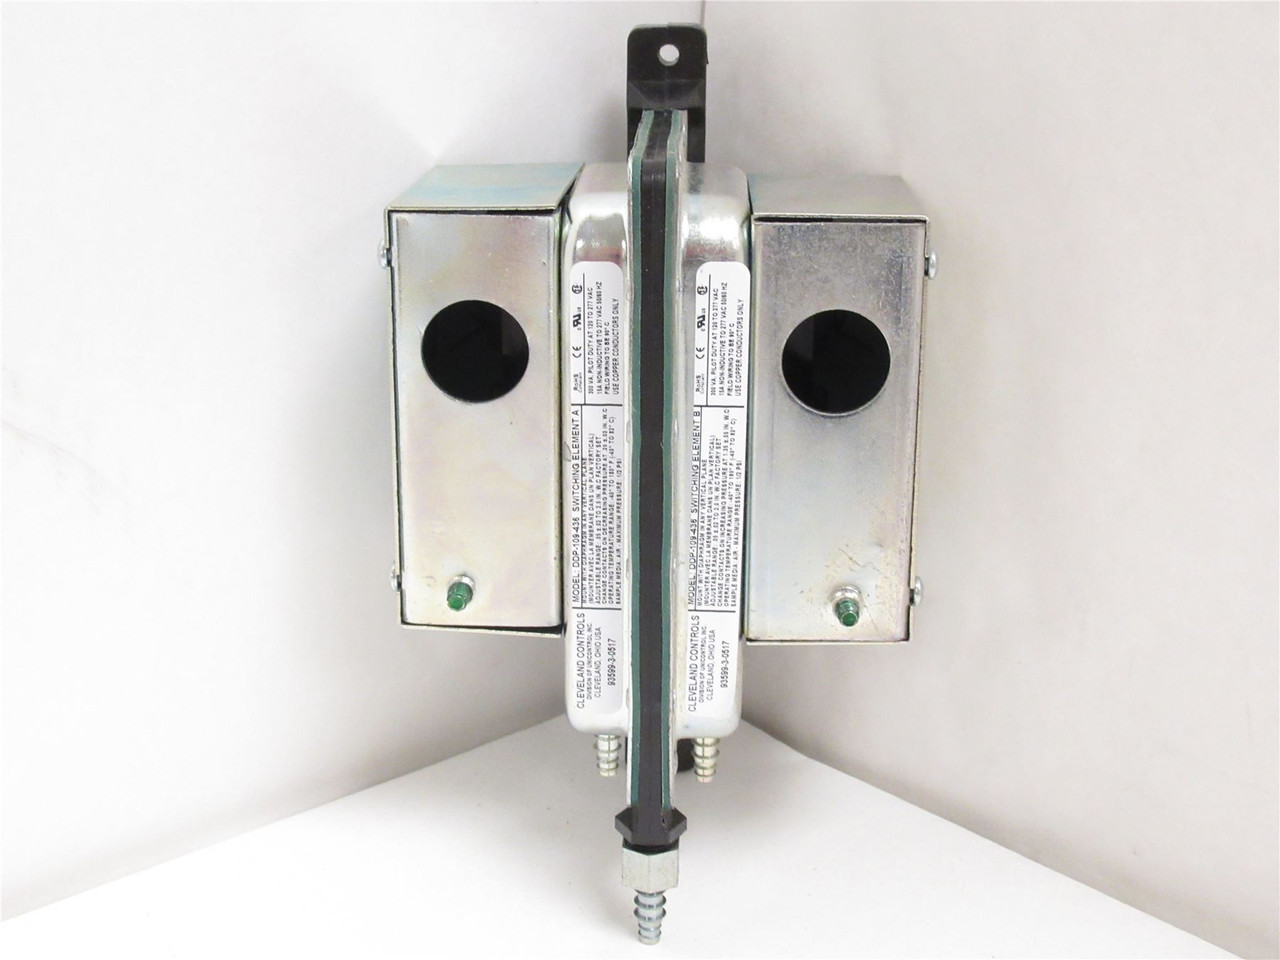 CCI DDP-109-436; Dual Setpoint Air Pressure Sensing Switch